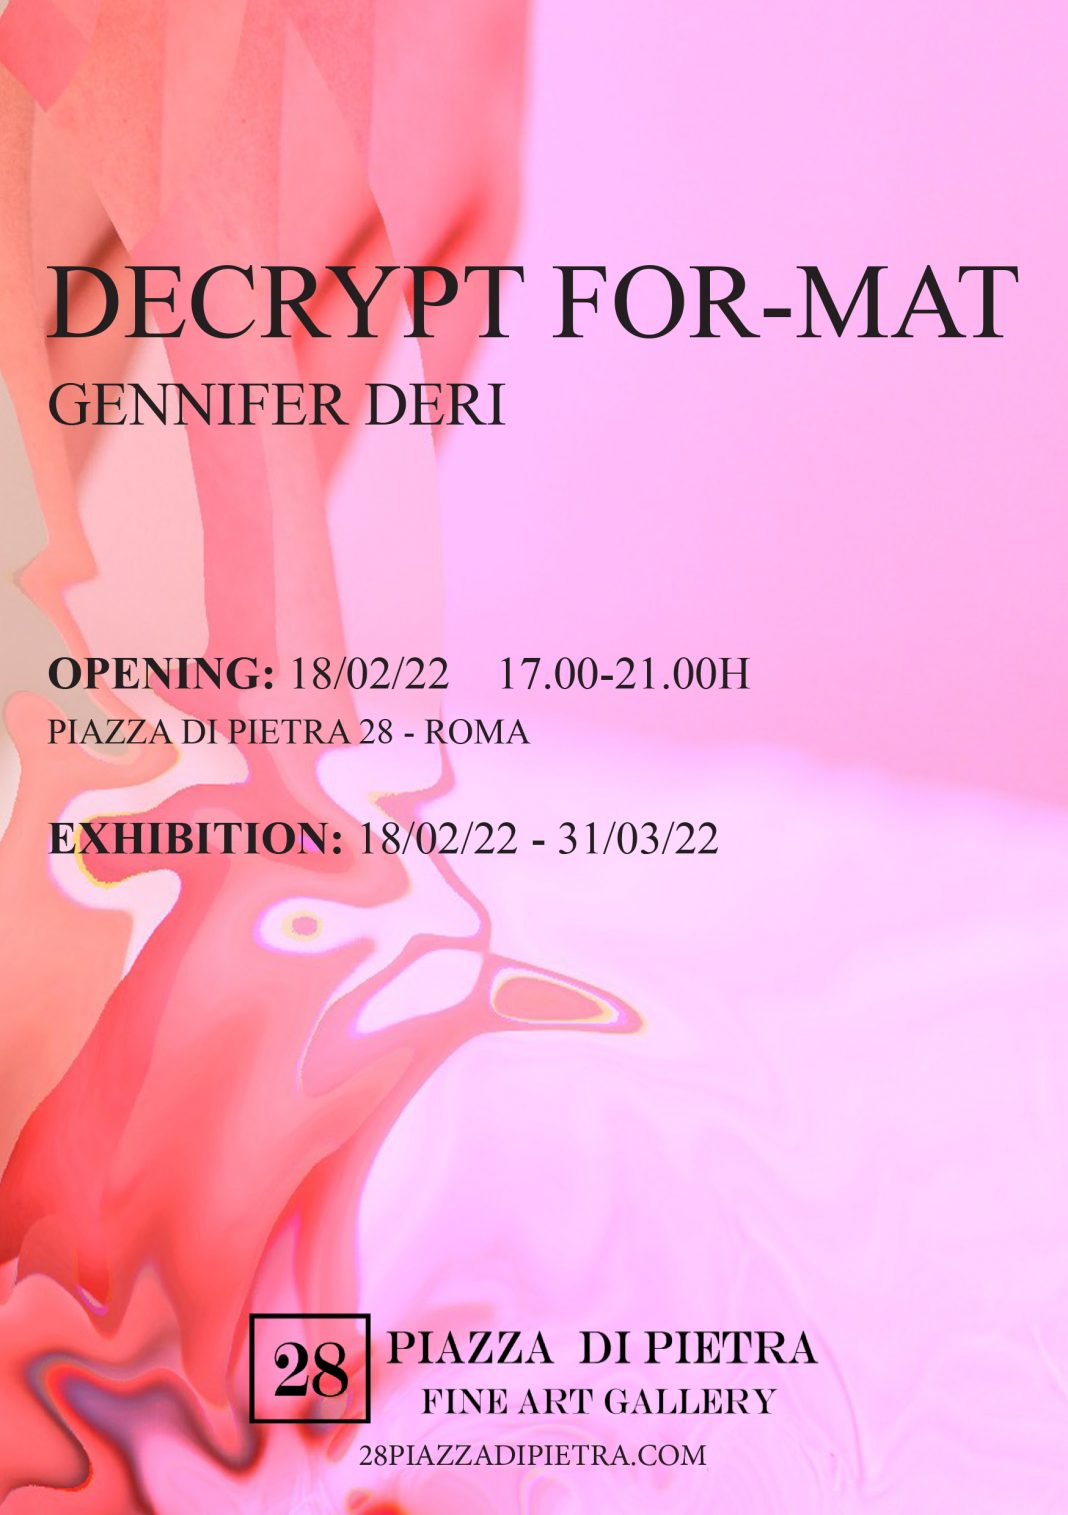 Gennifer Deri – Decrypt For-Mathttps://www.exibart.com/repository/media/formidable/11/img/6d1/invito_versione-2-1068x1515.jpg